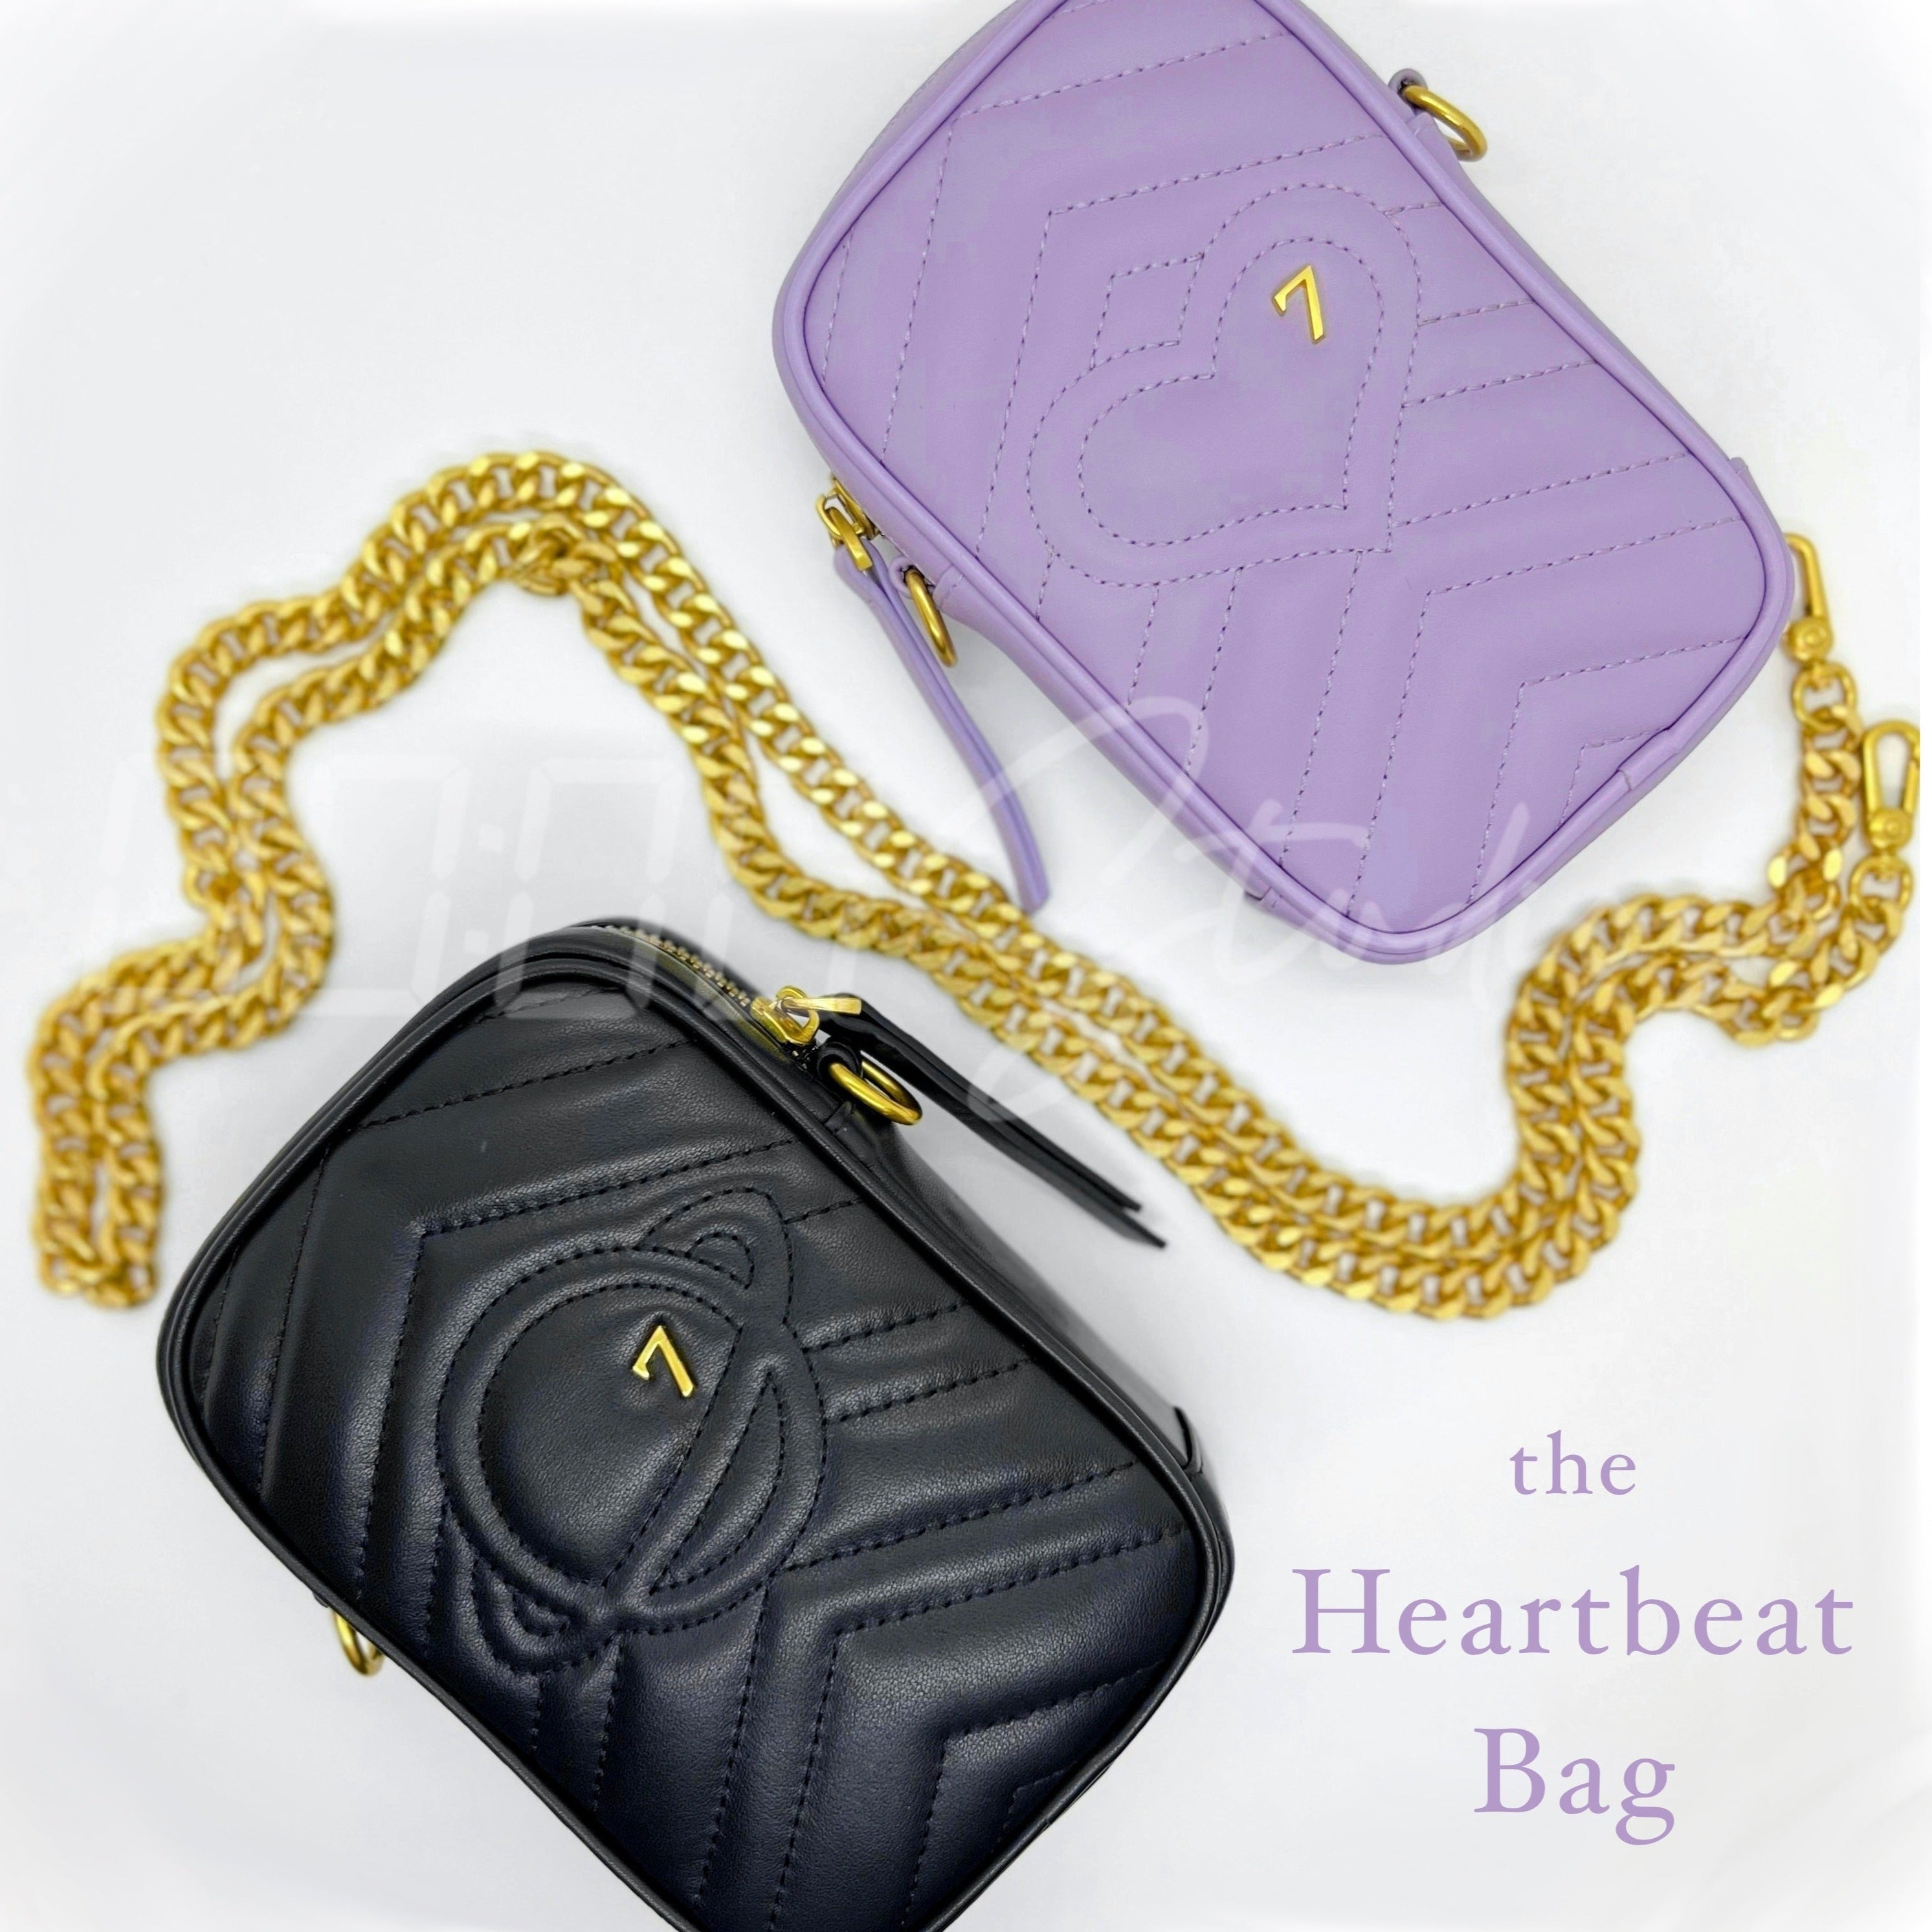 The Heartbeat Bag